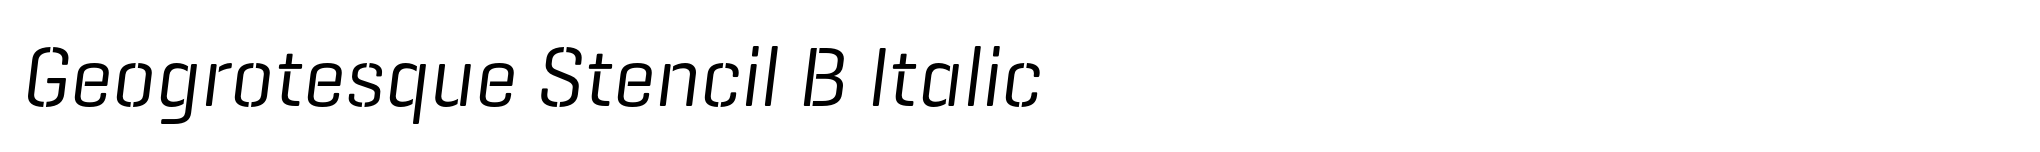 Geogrotesque Stencil B Italic image